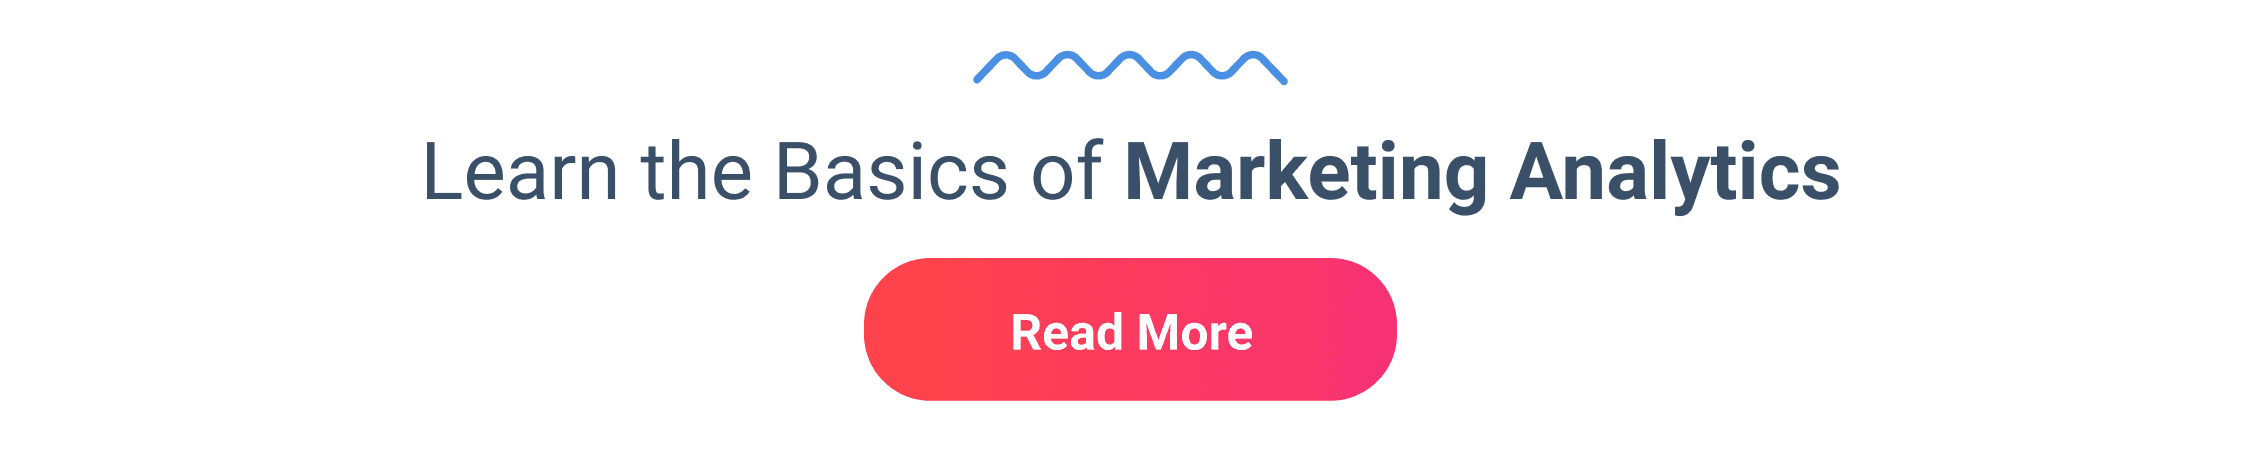 Learn the Basics of Marketing Analytics banner